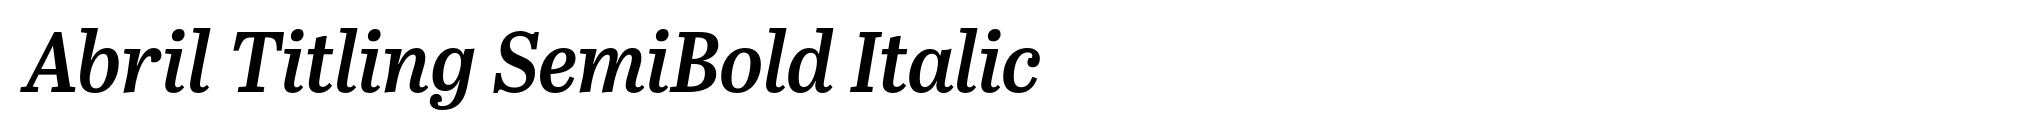 Abril Titling SemiBold Italic image